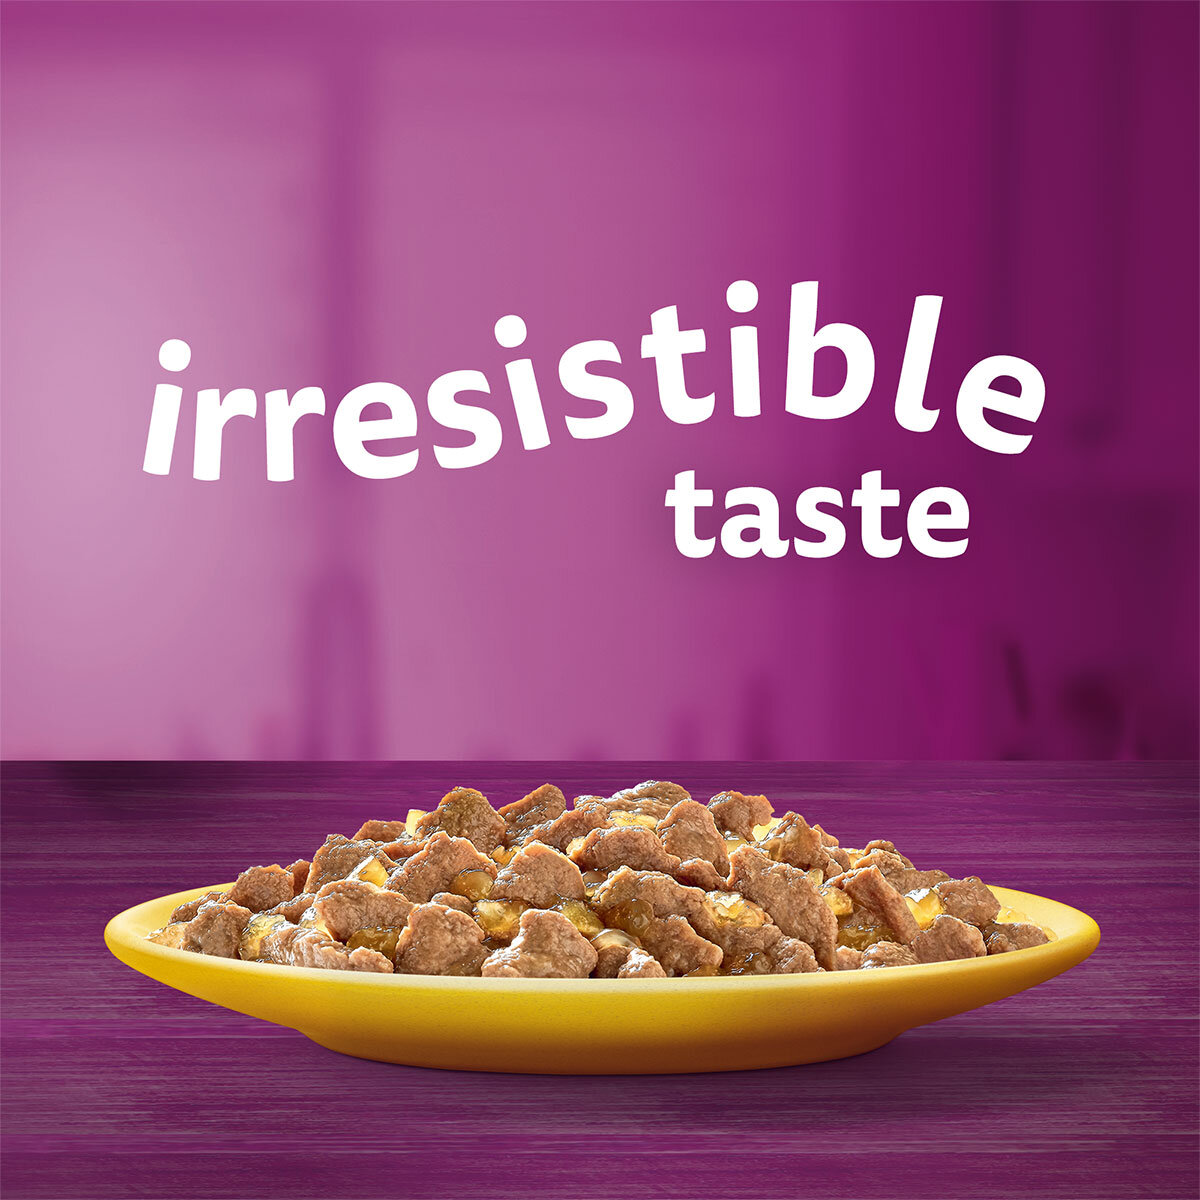 Irresistible Taste